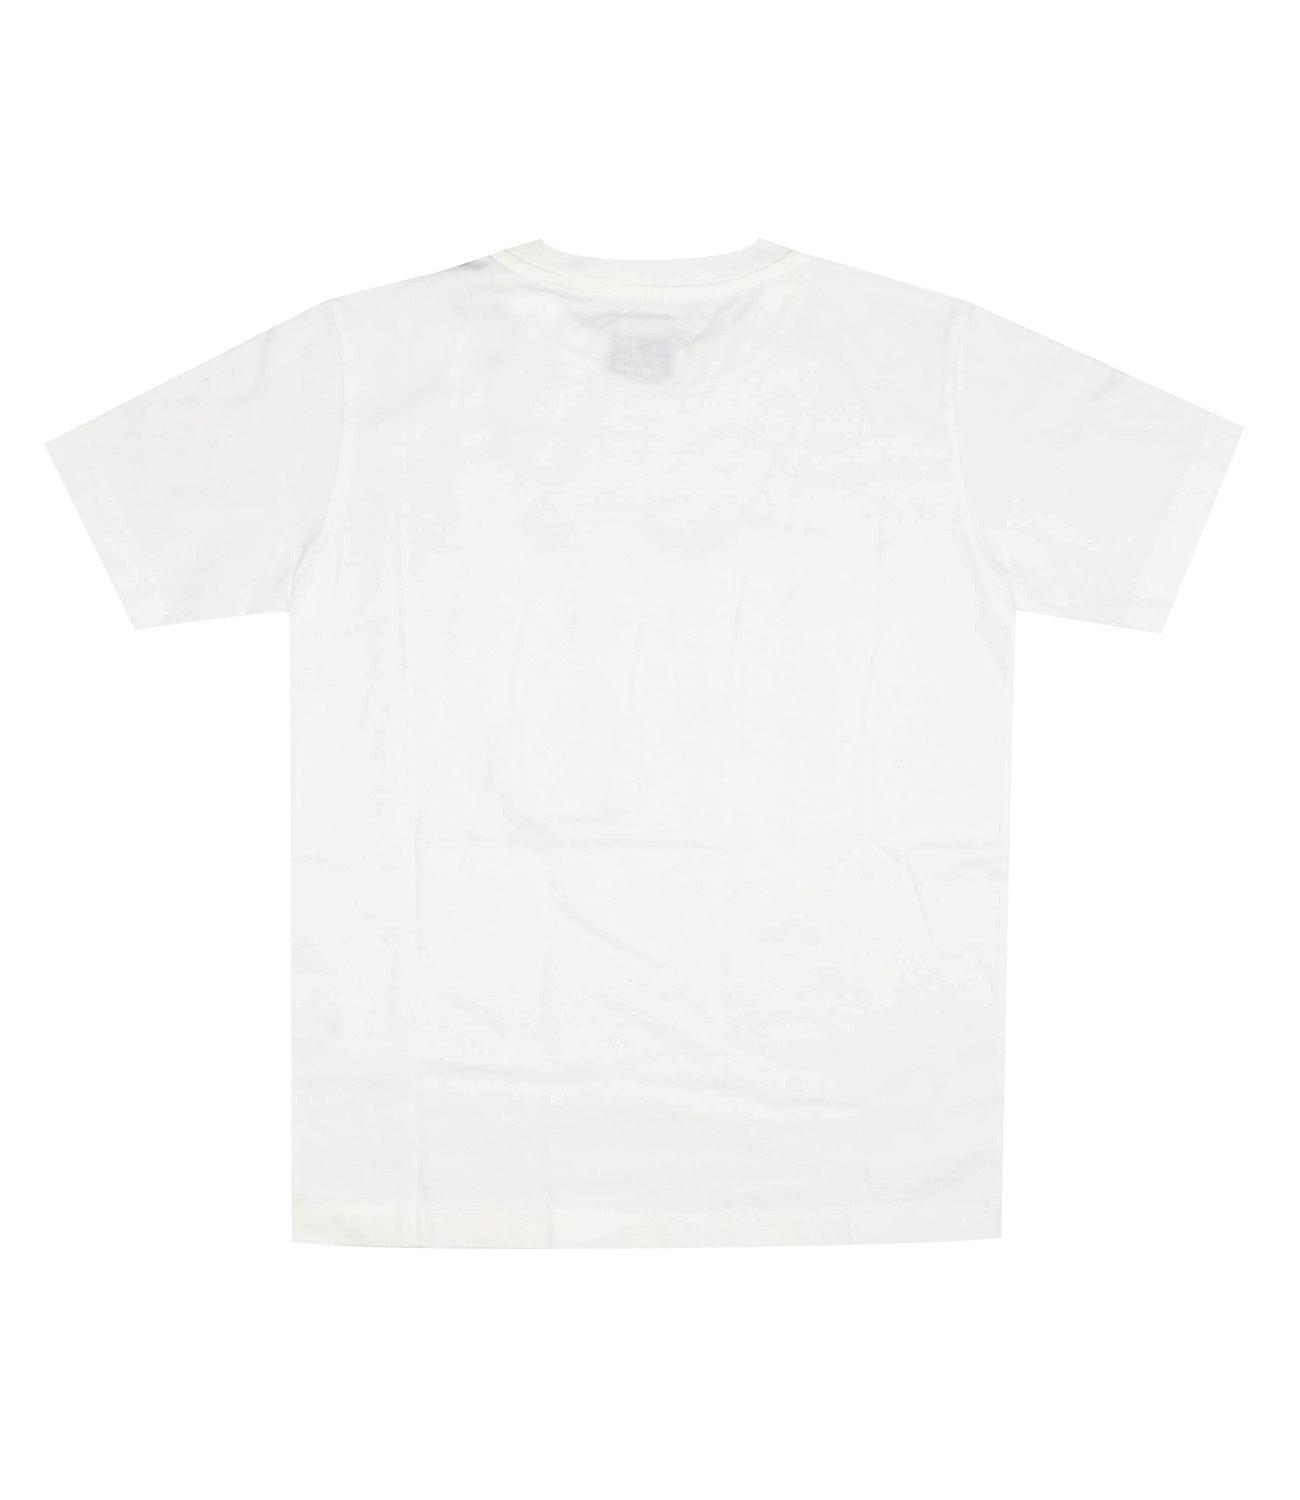 C.P. Company | White T-Shirt